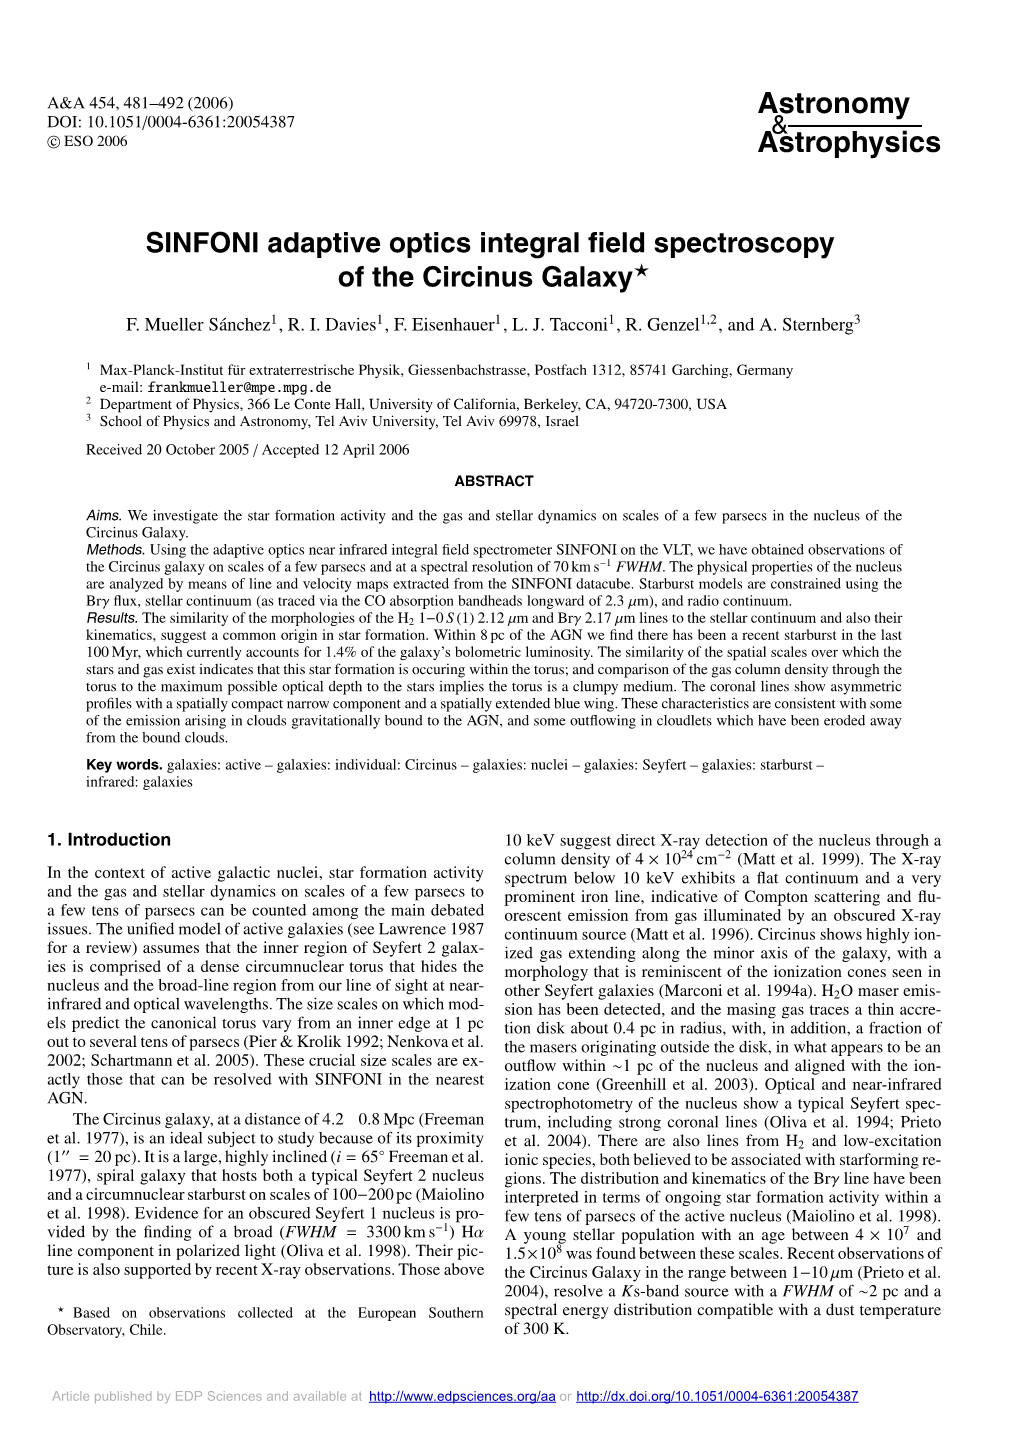 SINFONI Adaptive Optics Integral Field Spectroscopy of the Circinus Galaxy